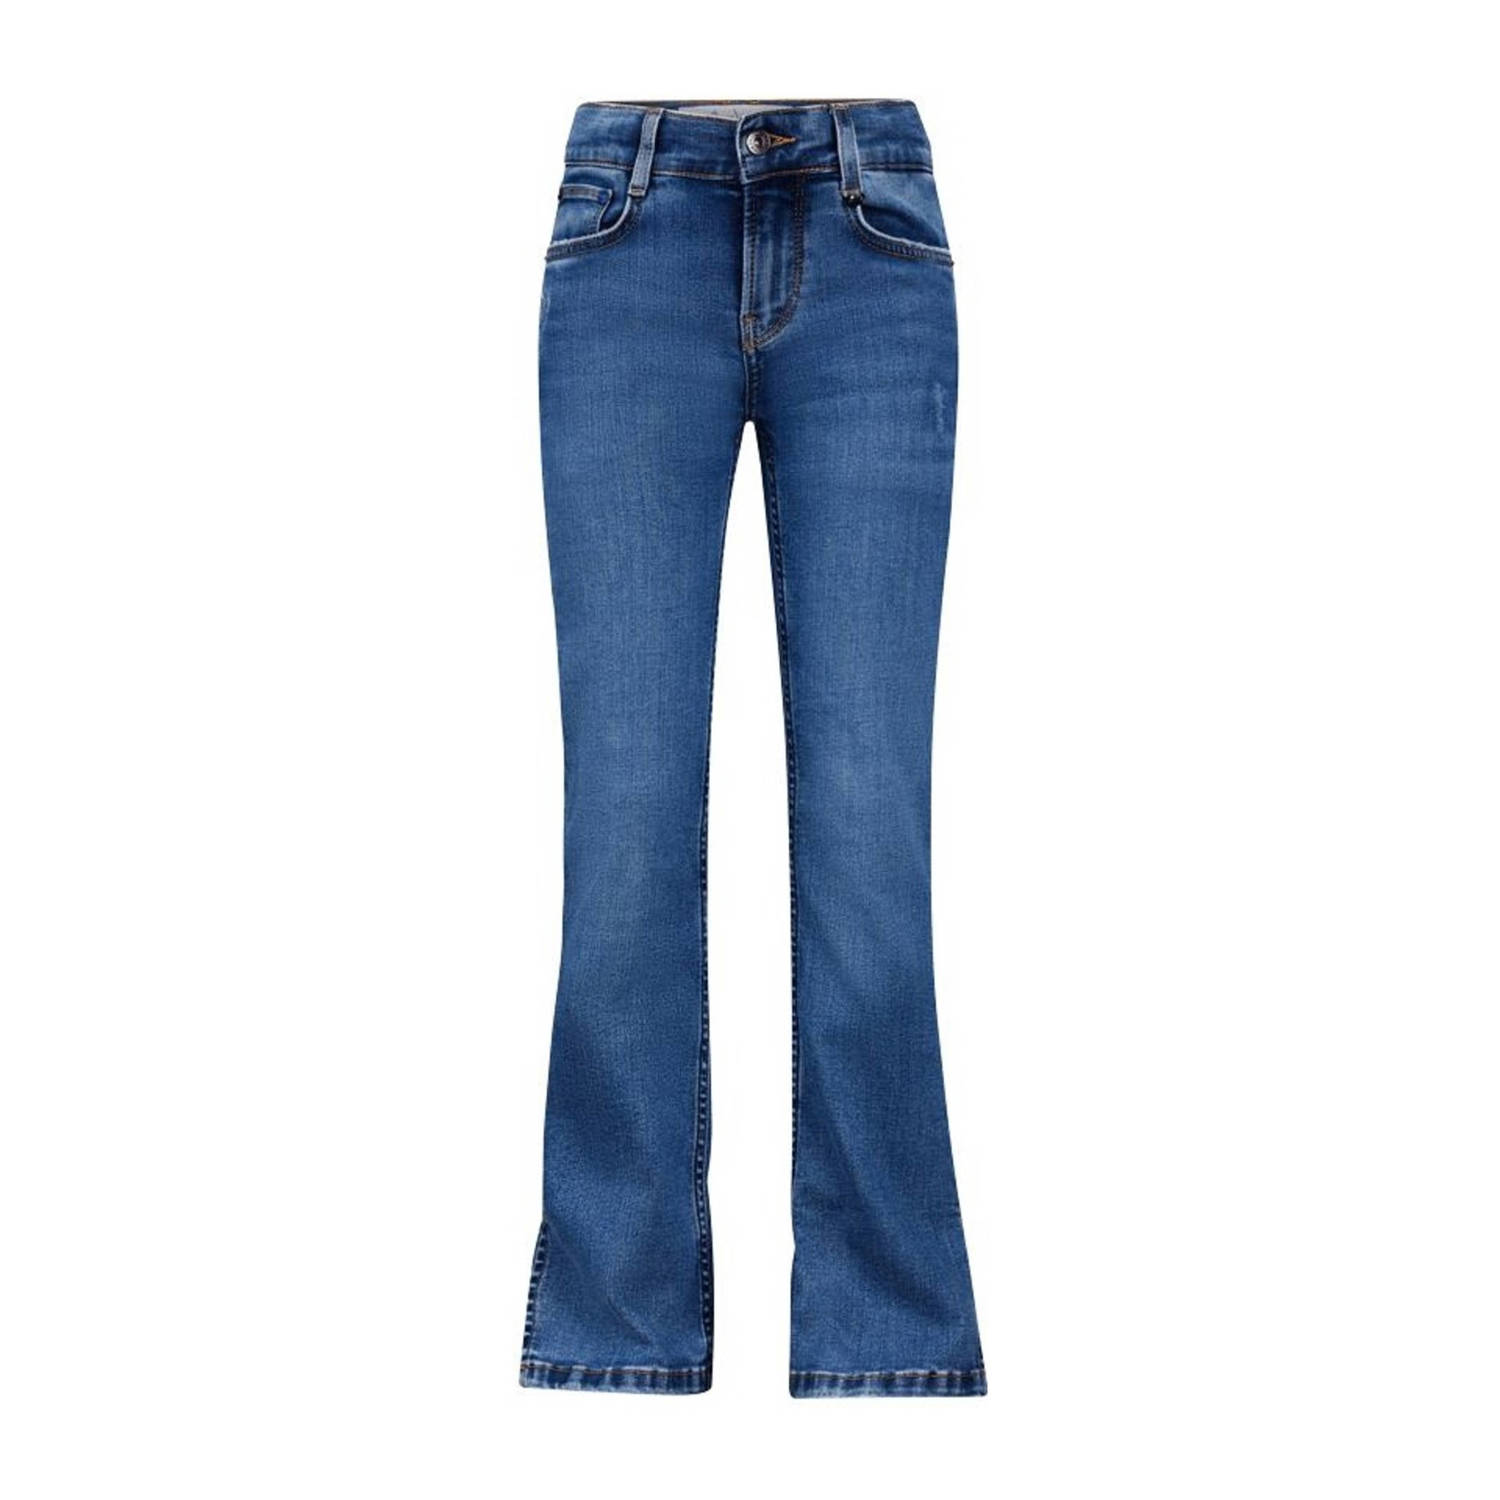 Retour Jeans flared jeans Anouck Indigo dark blue denim